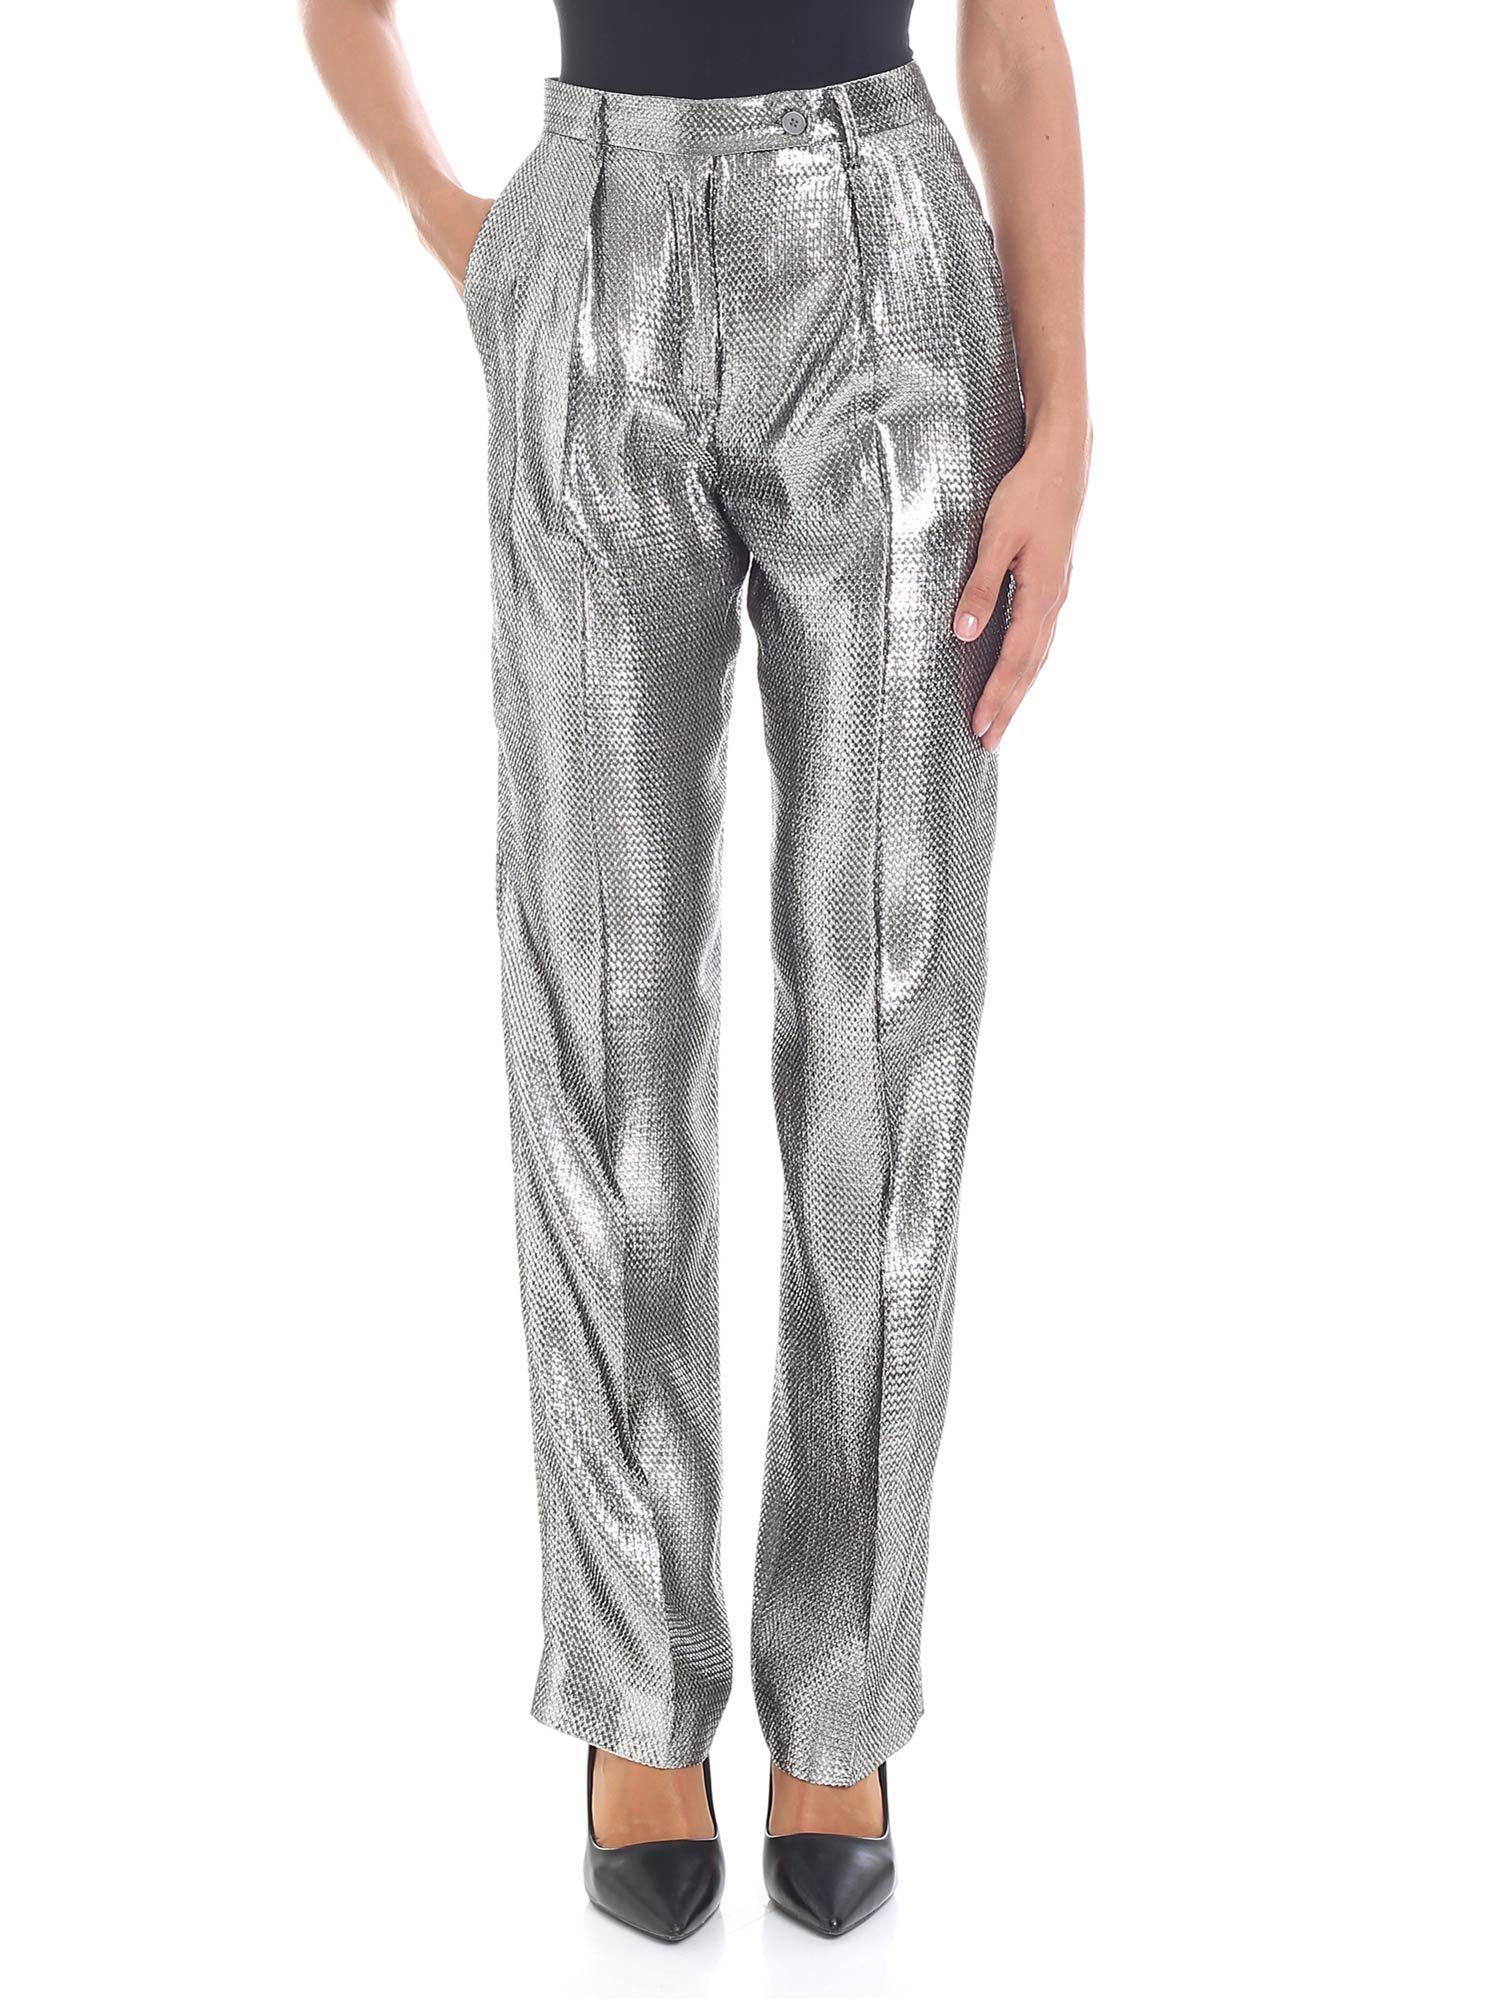 Alberta Ferretti Lamé Thread Silver Trousers in Metallic - Lyst